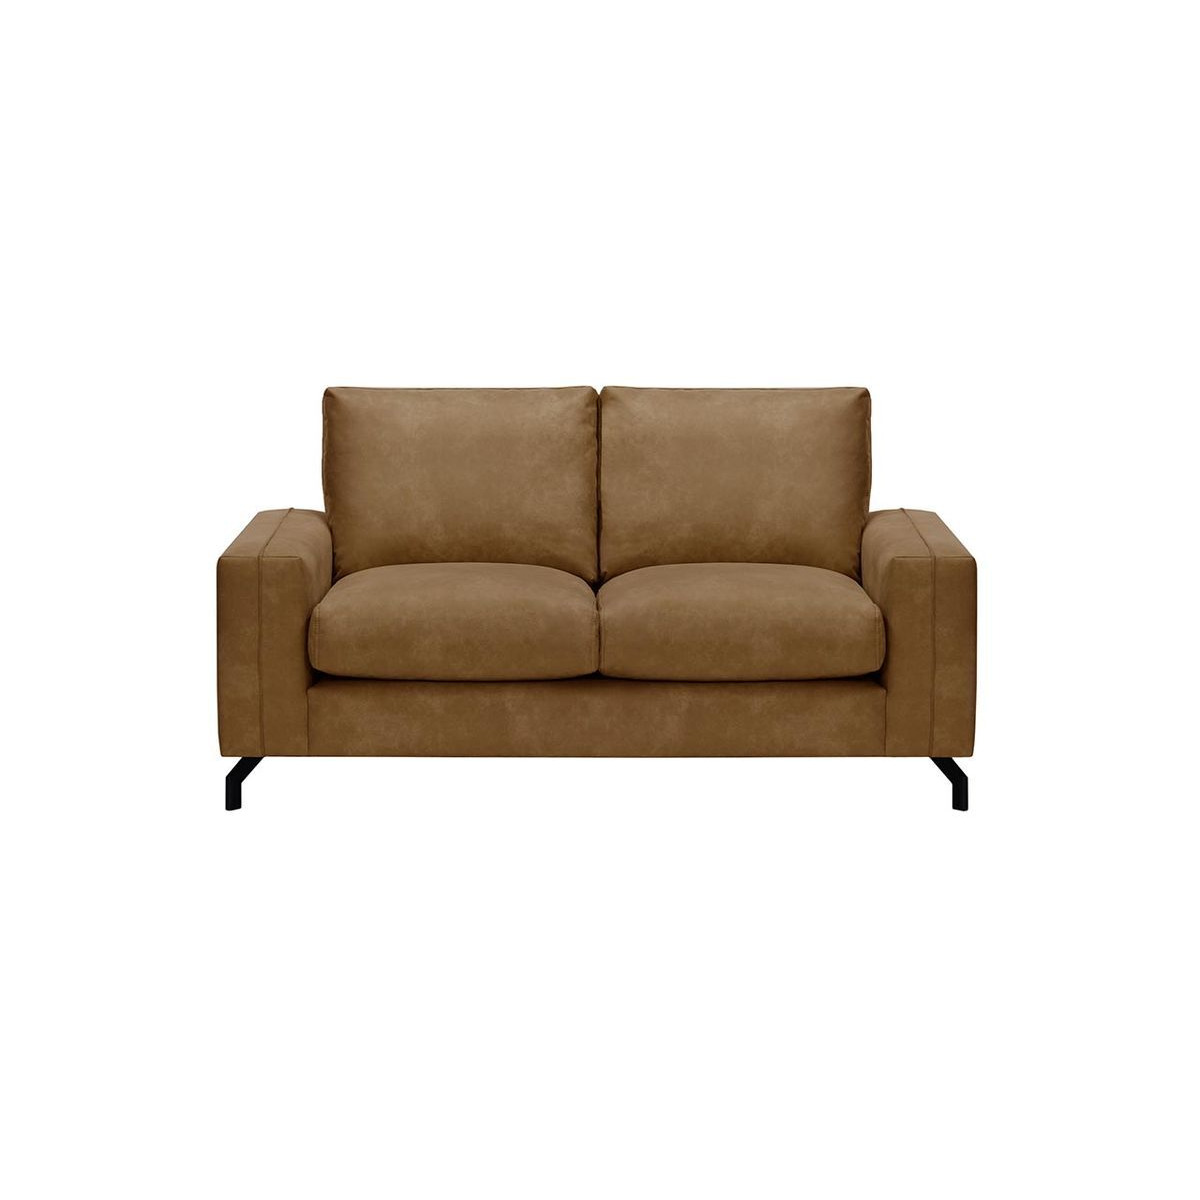 Hannah 2 Seater Sofa, brown - image 1